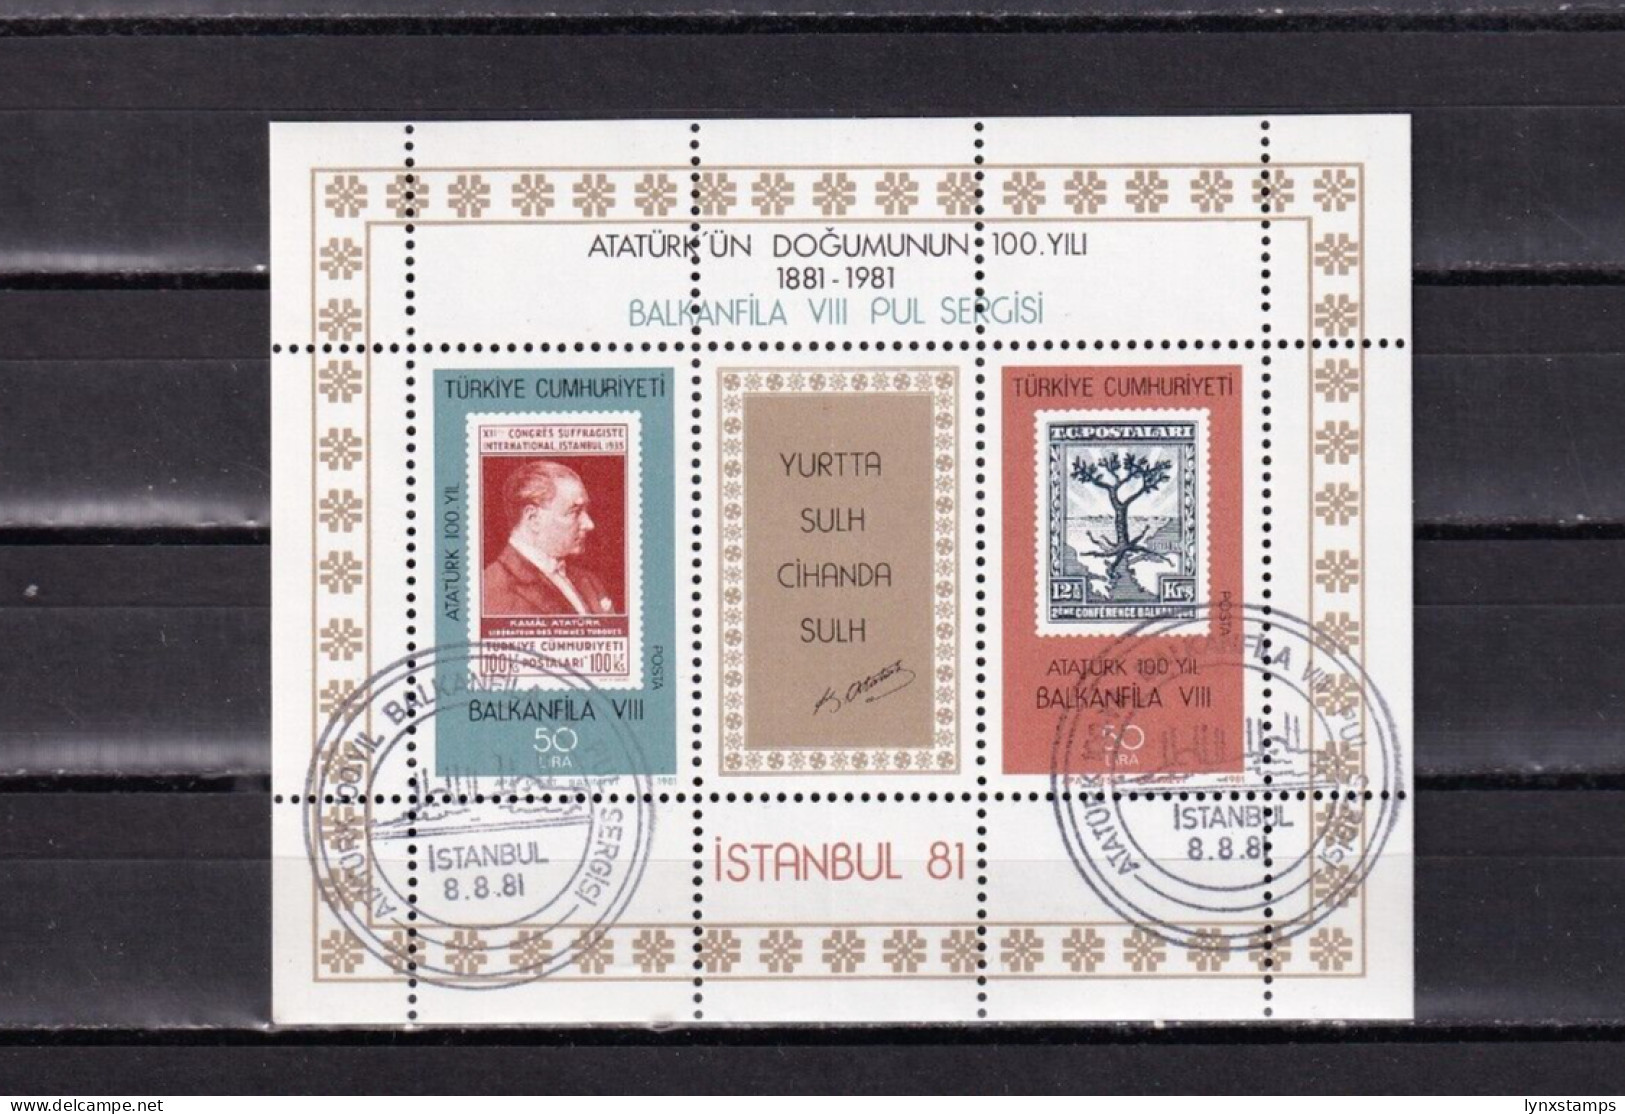 SA03 Turkey 1981 Balkanfila VIII Stamp Exhibition, Ankara Minisheet Used - Used Stamps